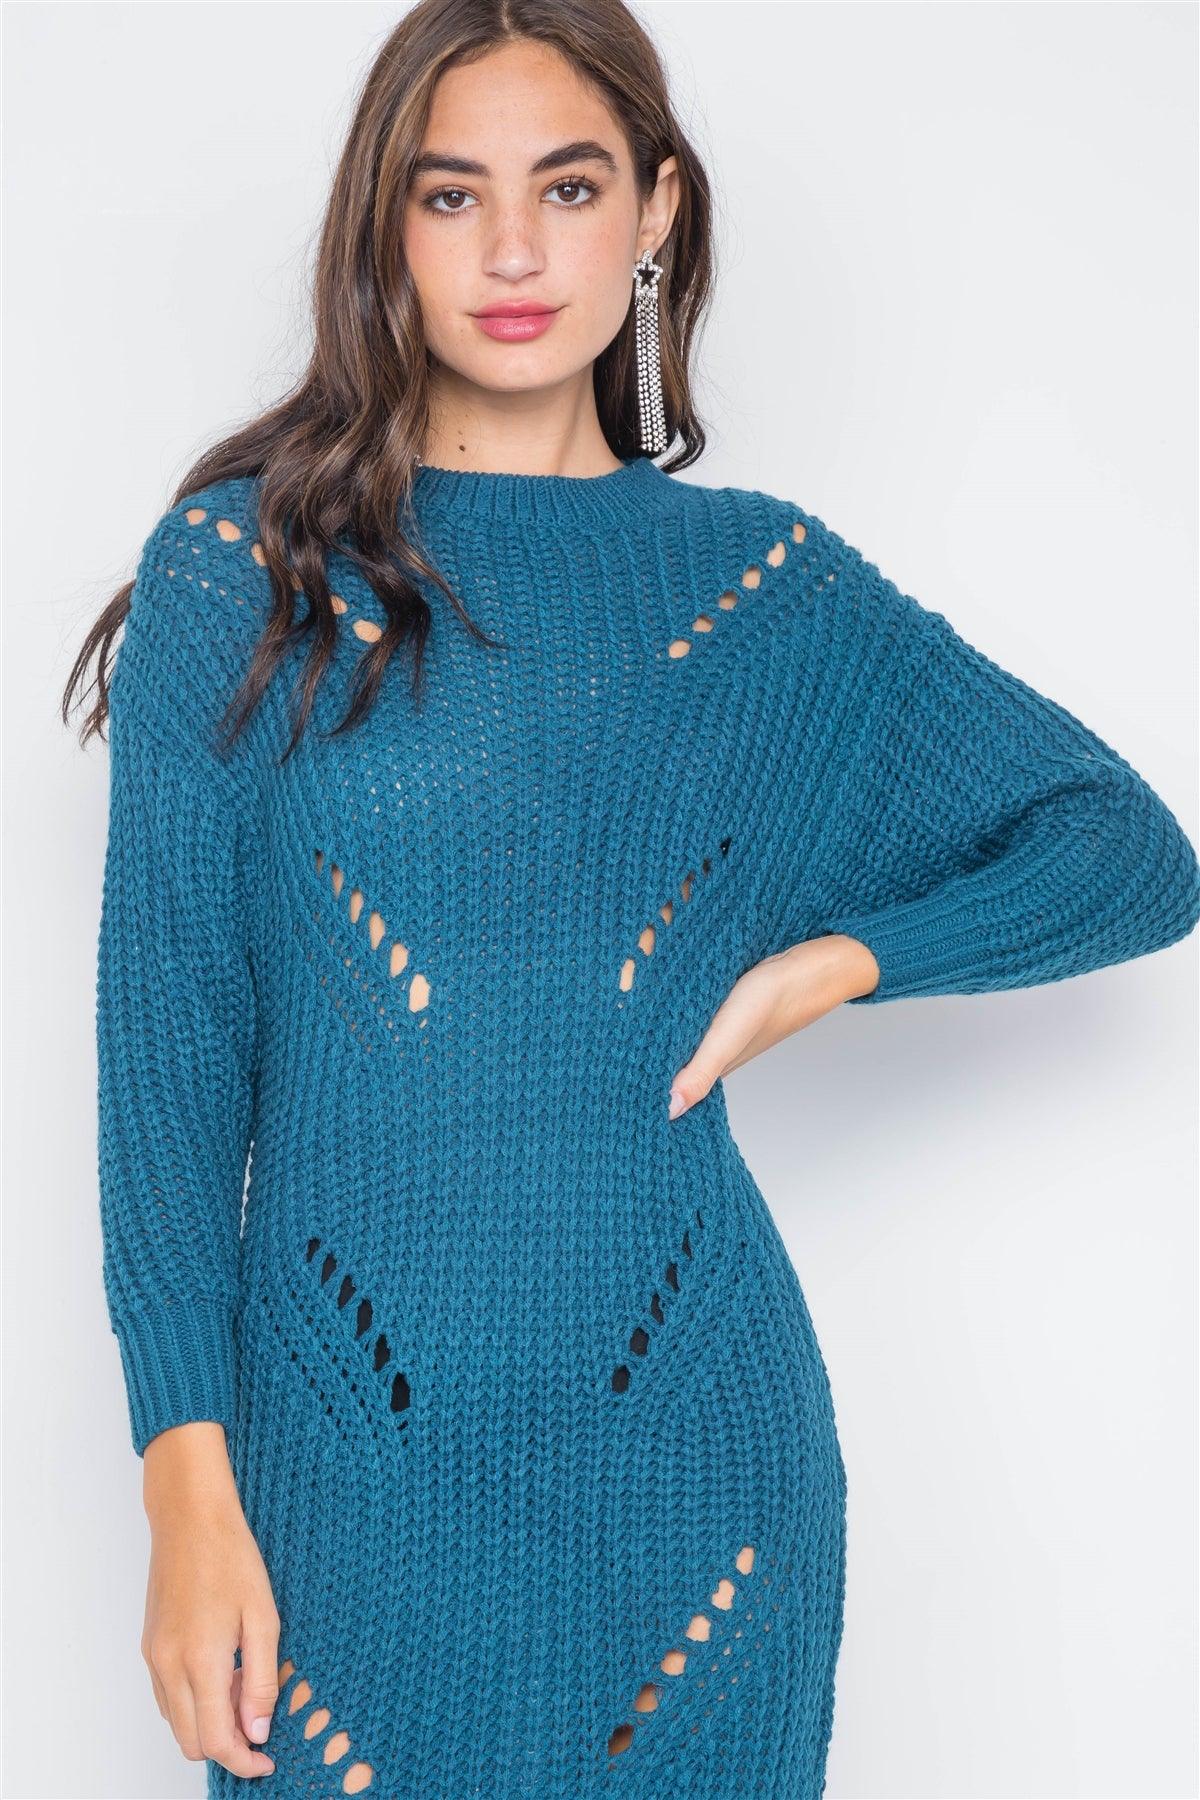 Teal Chunky Knit Long Sleeve Sweater Dress / 2-3